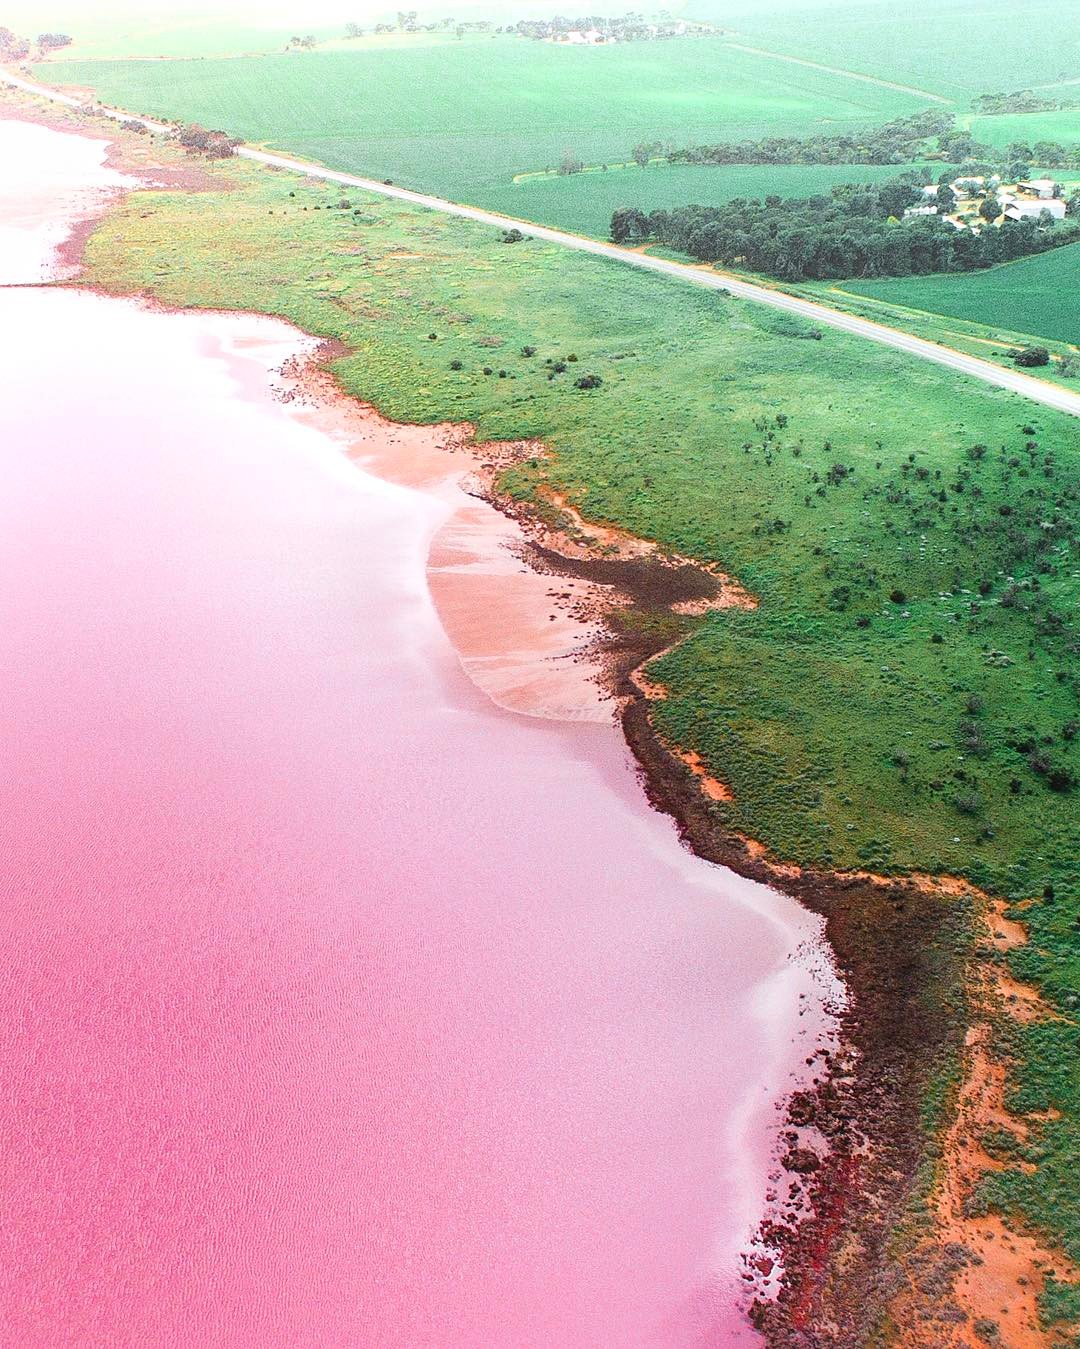 Photograph of a pink salt lake in Adelaide South Australia taken with a DJi Maverick Drone